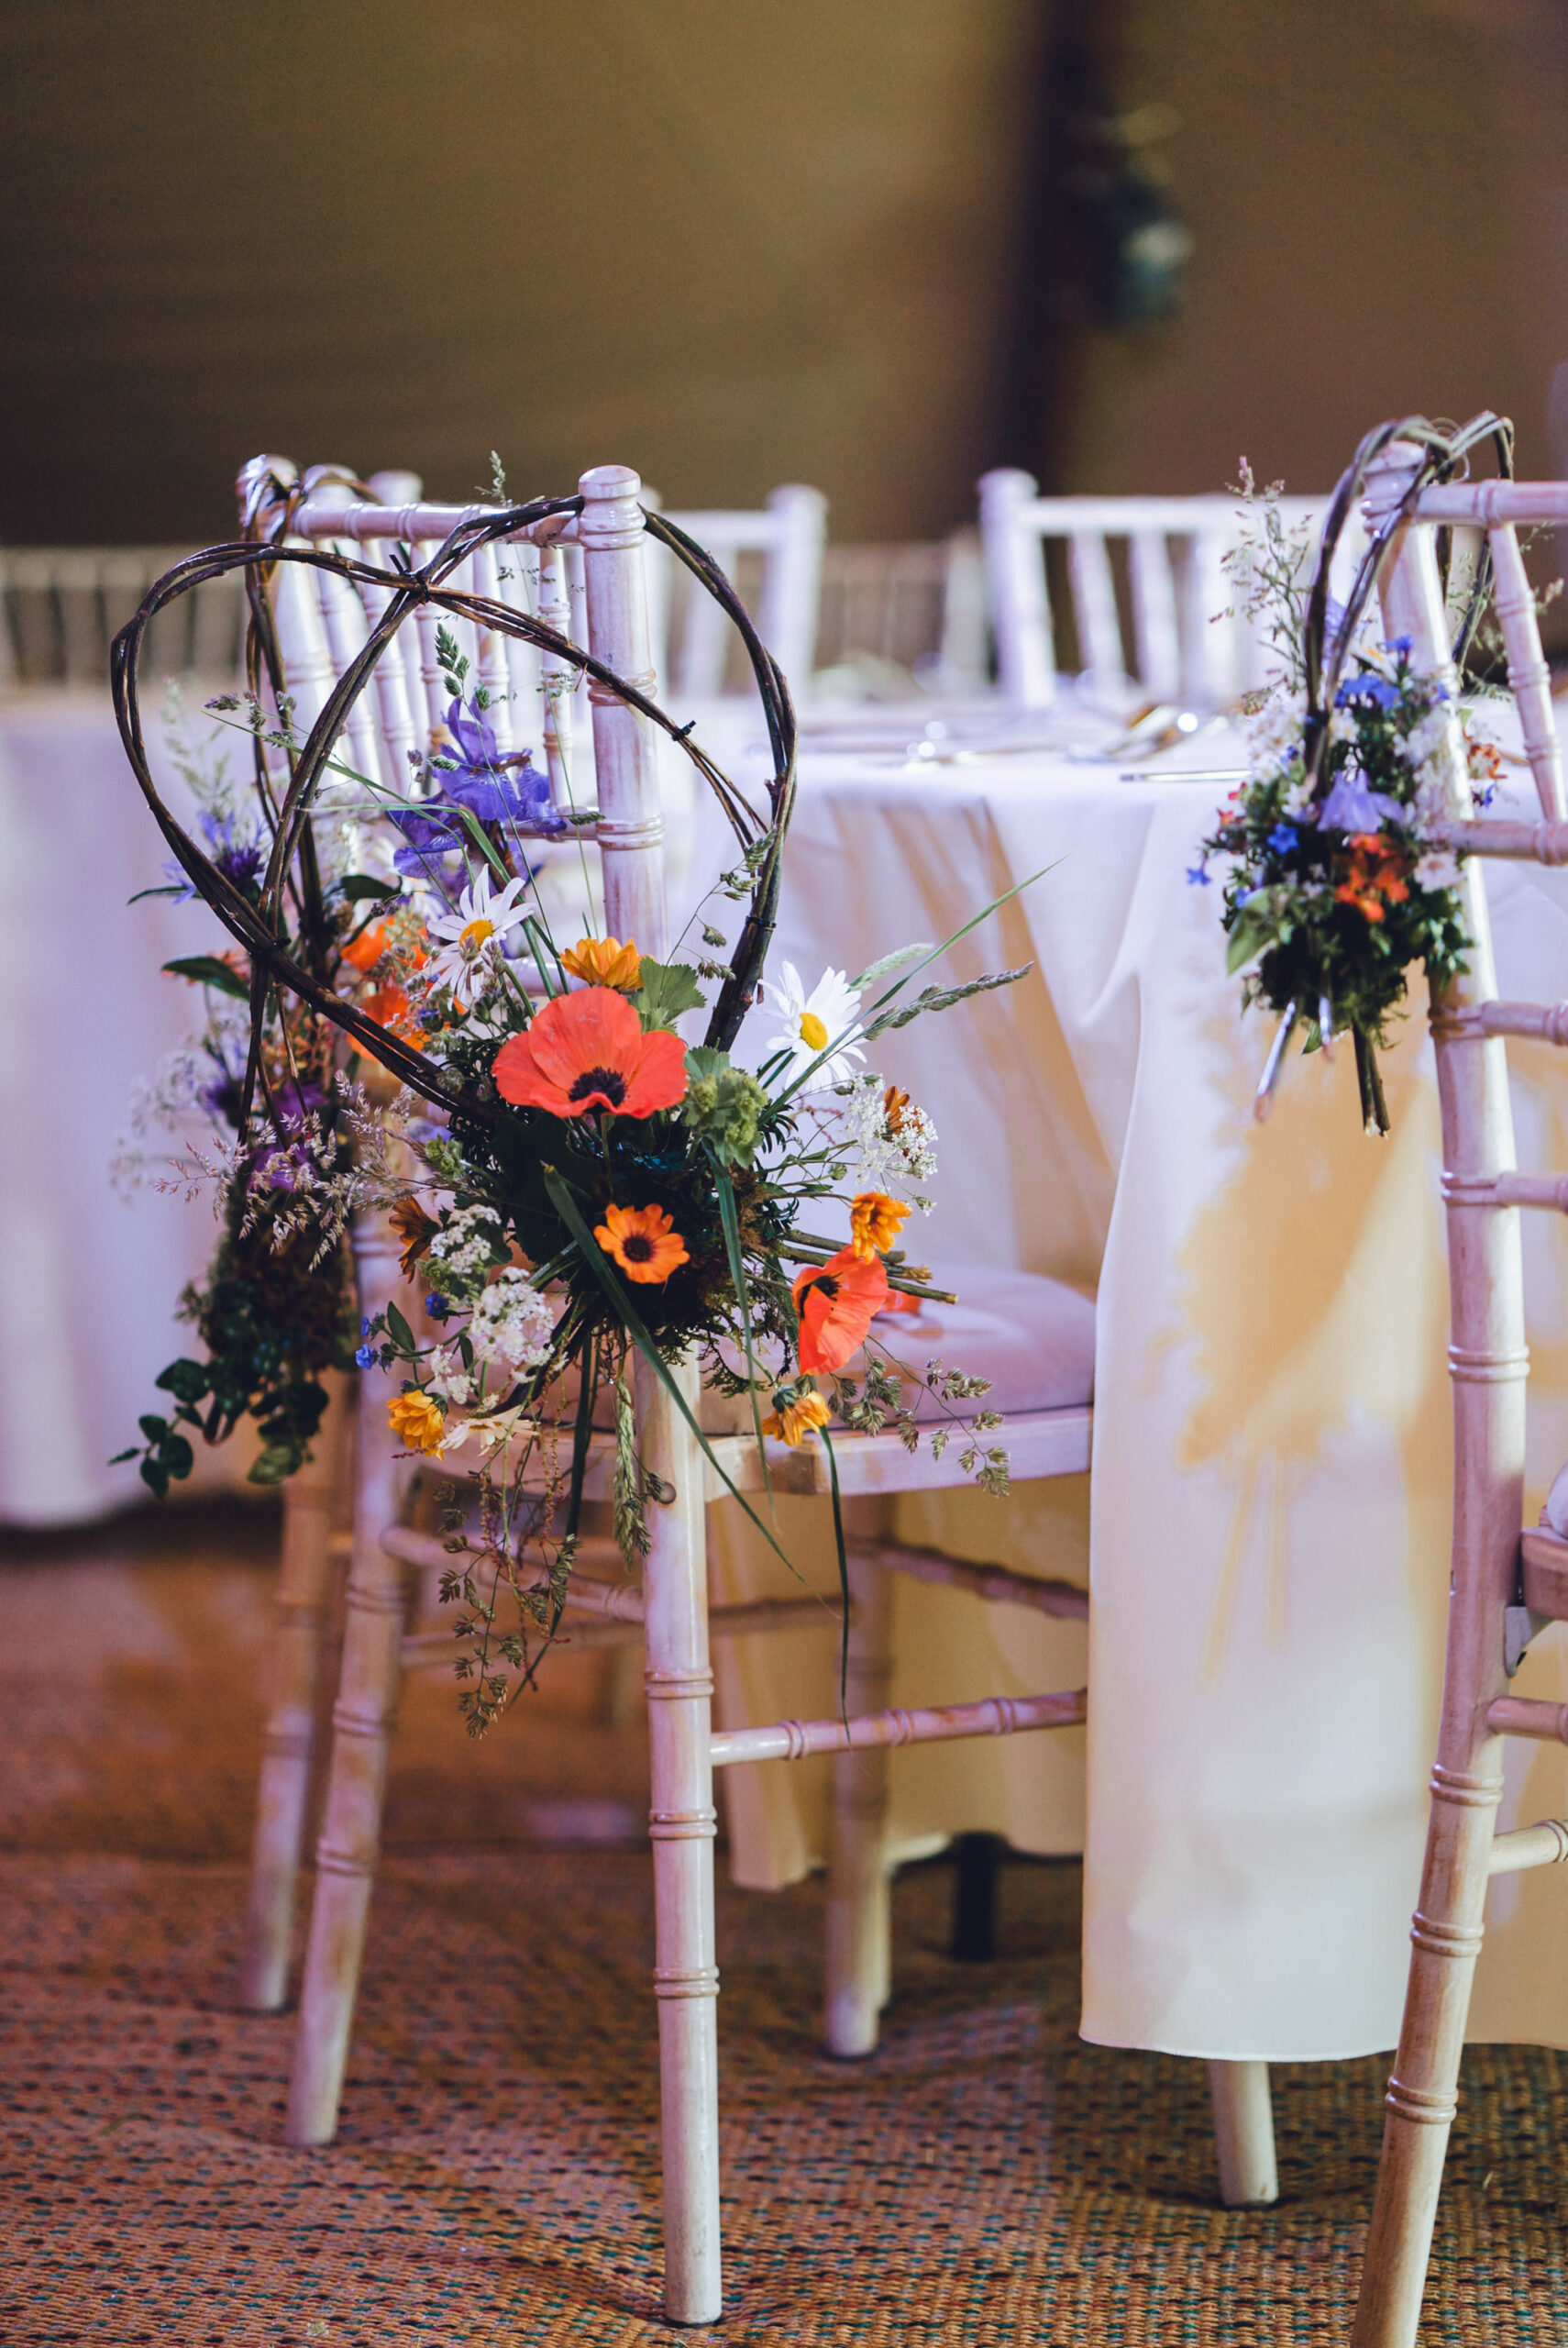 Colour pop wedding decor - Wedding florals - wedding decor tipis - tipi wedding